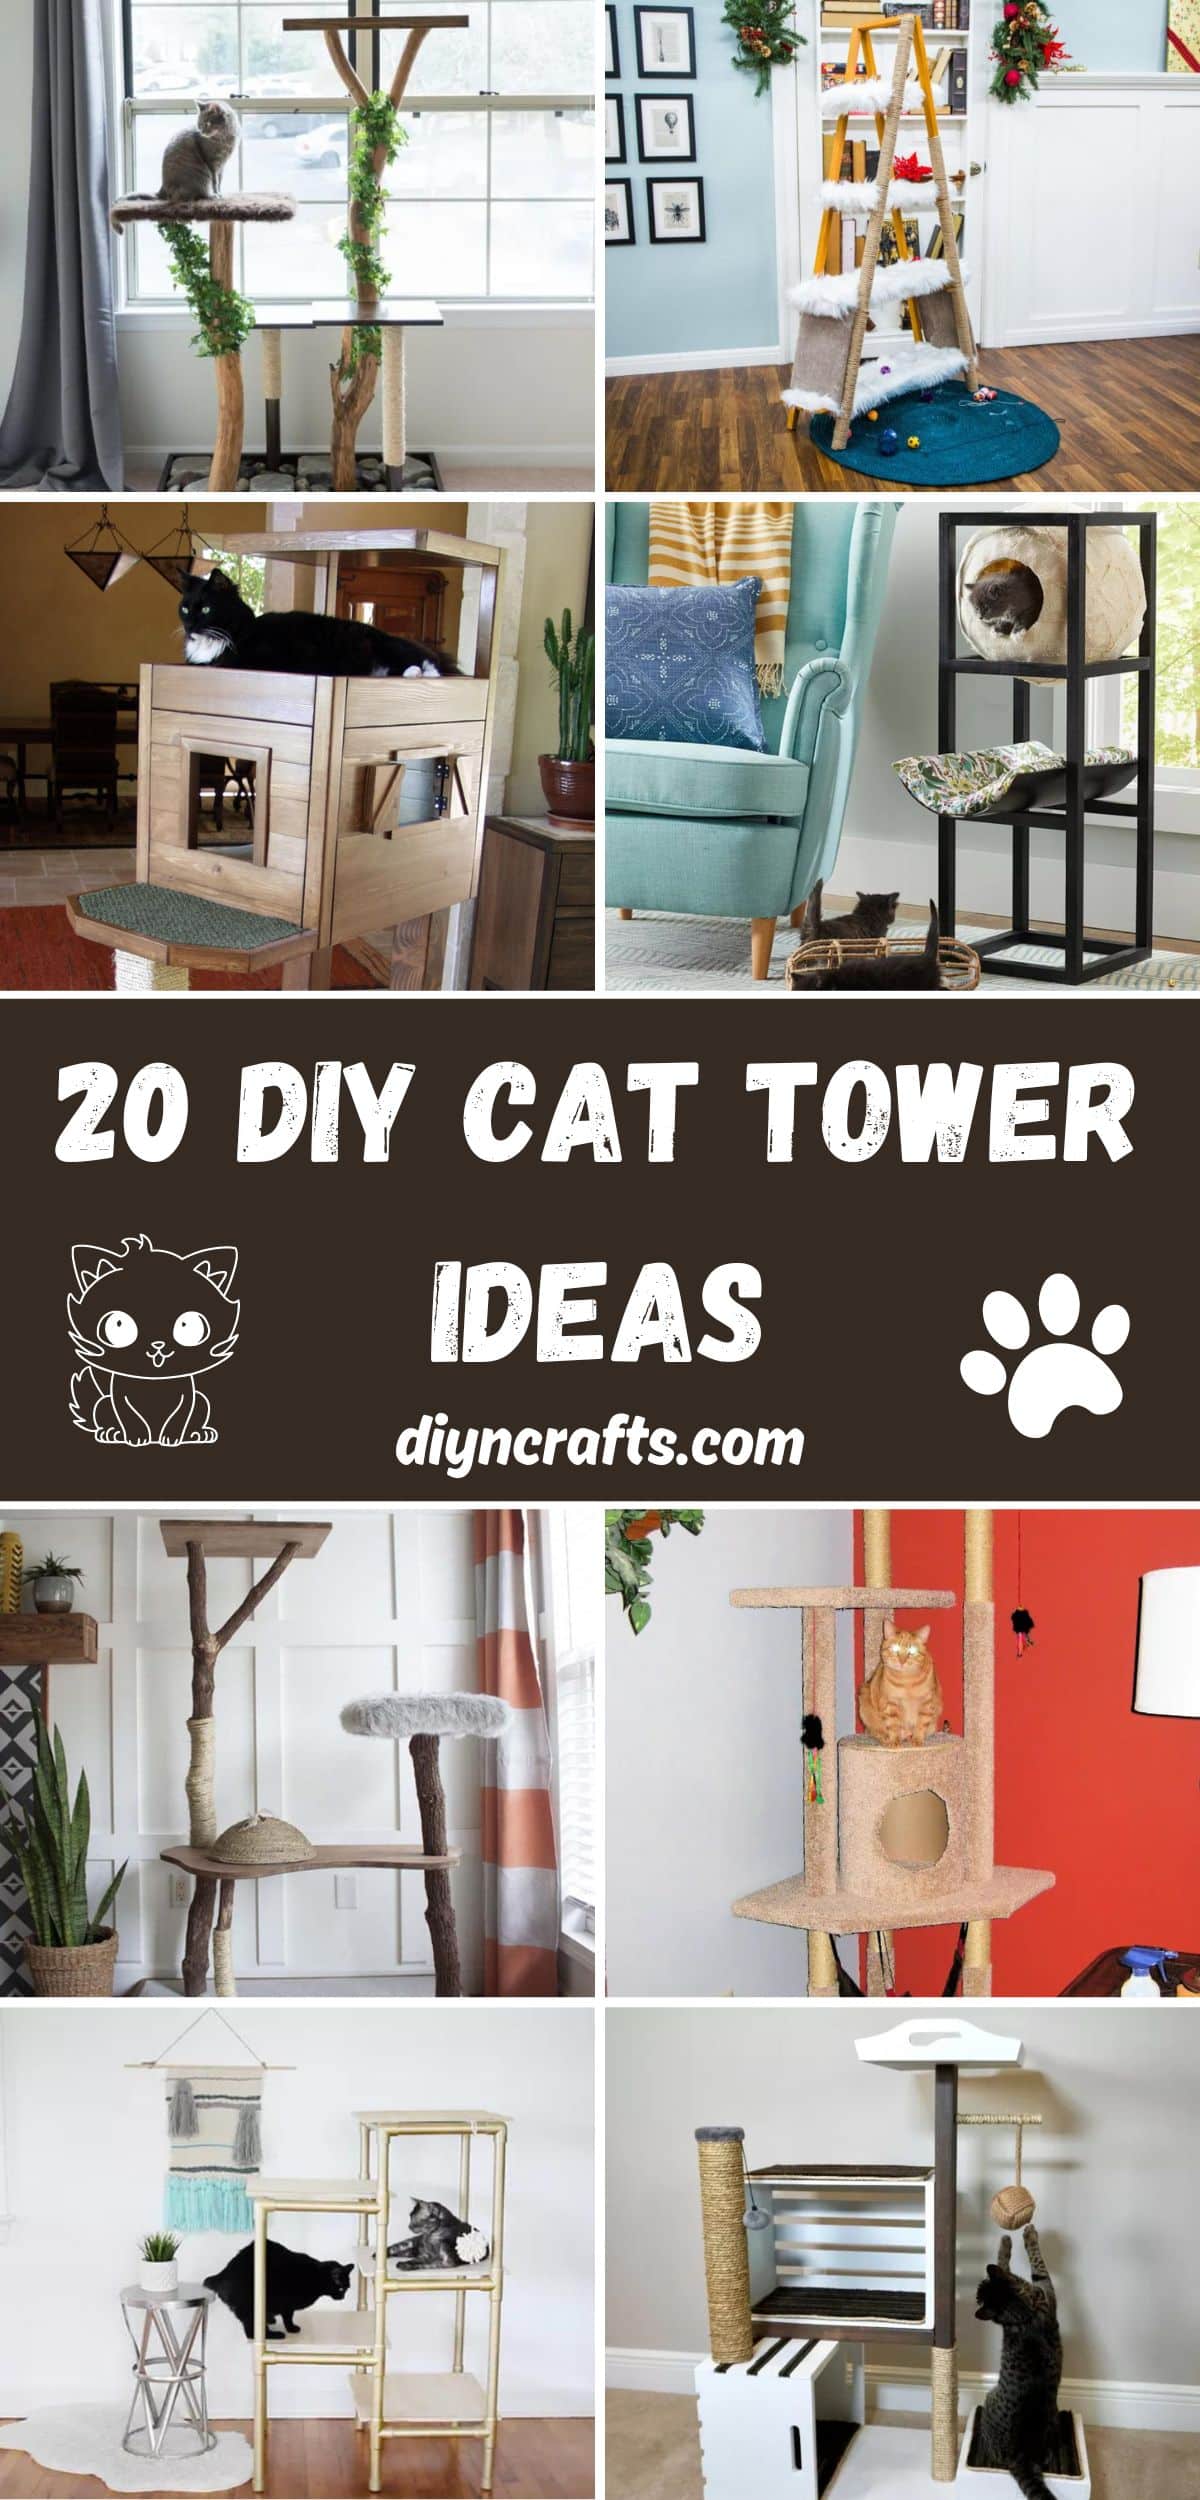 20 DIY Cat Tower Ideas collage.